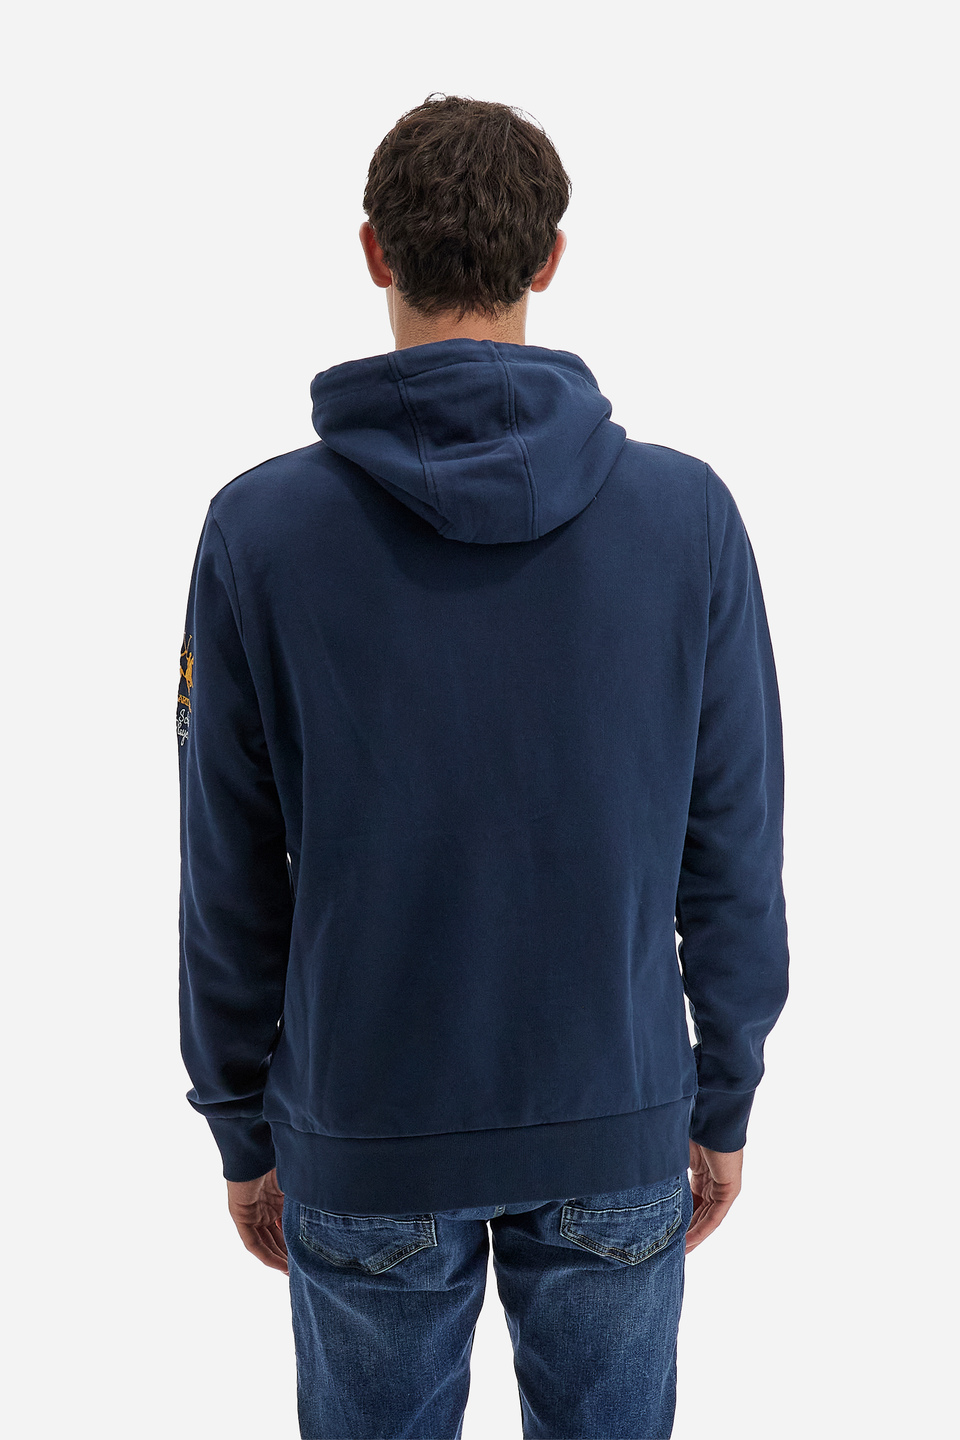 Polo Academy men's full zip hooded sweatshirt in solid color logo on shoulder - Vanek | La Martina - Official Online Shop